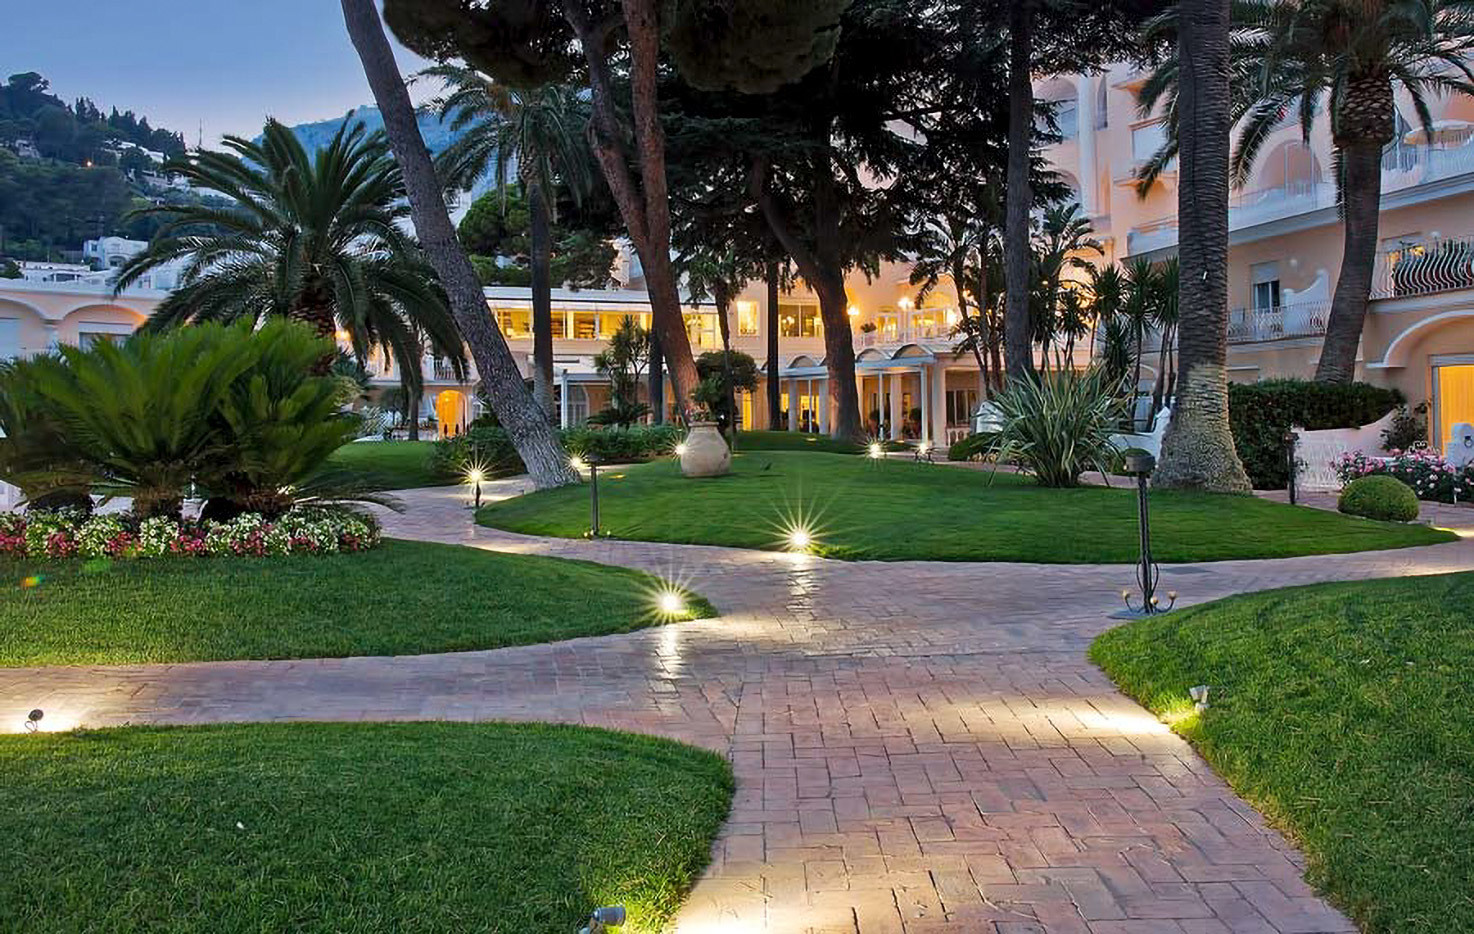 Gardens of Hotel Quisisana in Capri